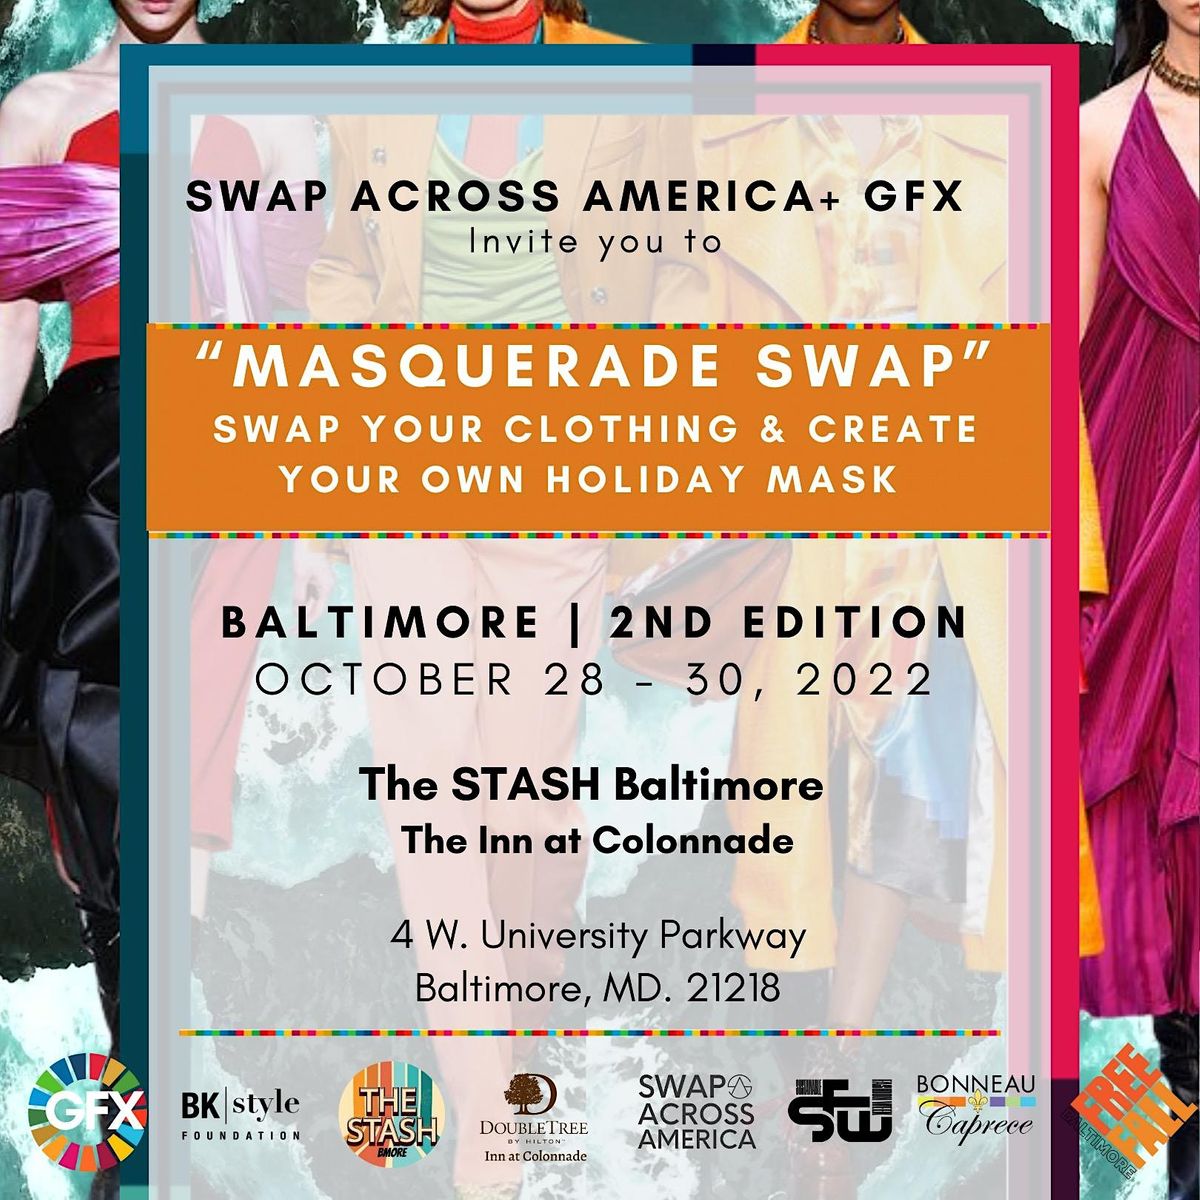 Swap Across America | Baltimore 2nd Edition  \u201cMASQUERADE SWAP\u201d Experience